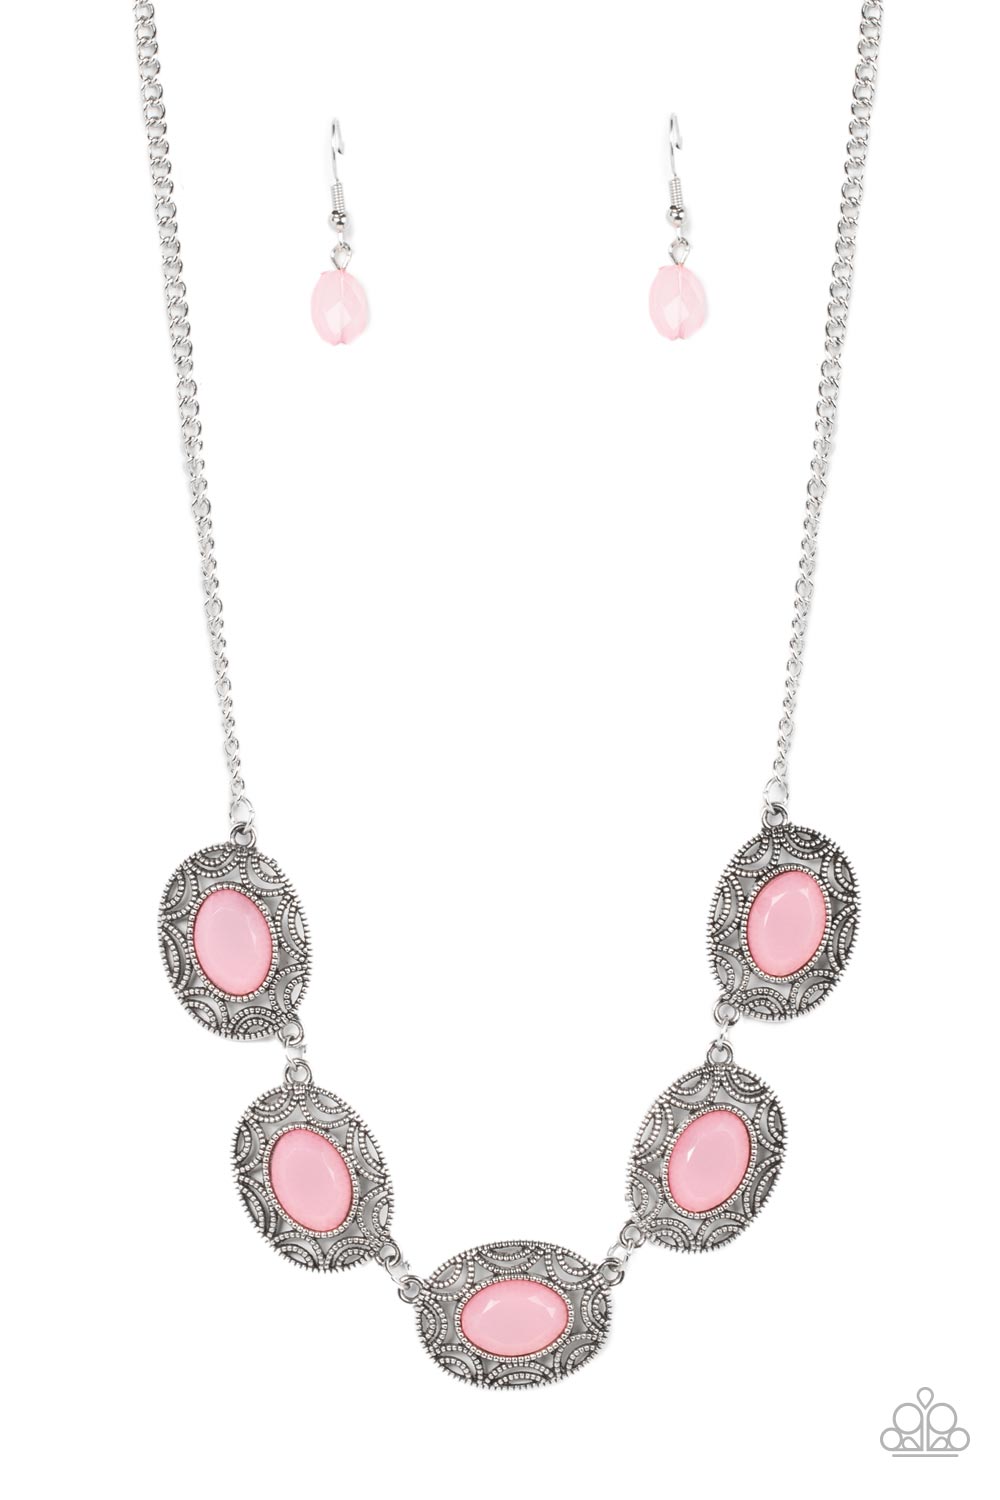 Sunshiny Shimmer - Pink Beads & Sunburst Pattern Frames Paparazzi Necklace & matching earrings